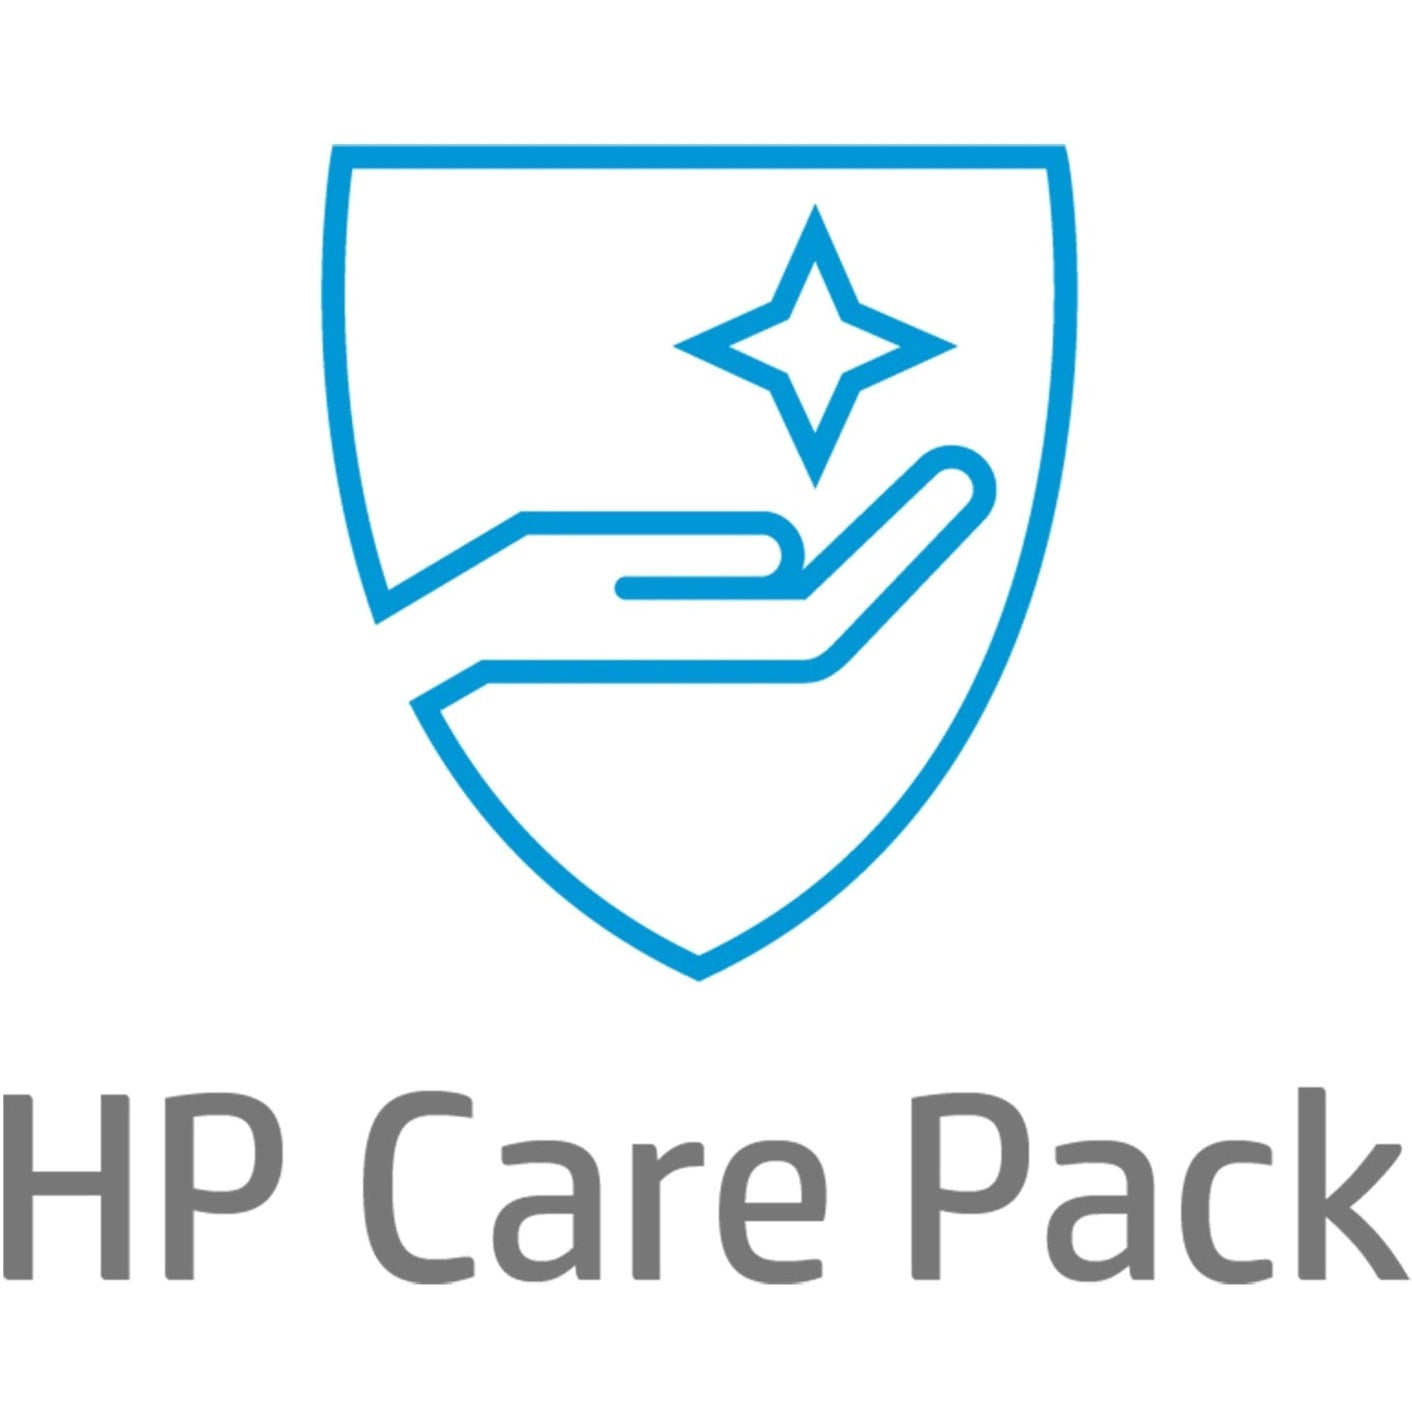 HP Care Pack - 5 Year - Service (UL659E)